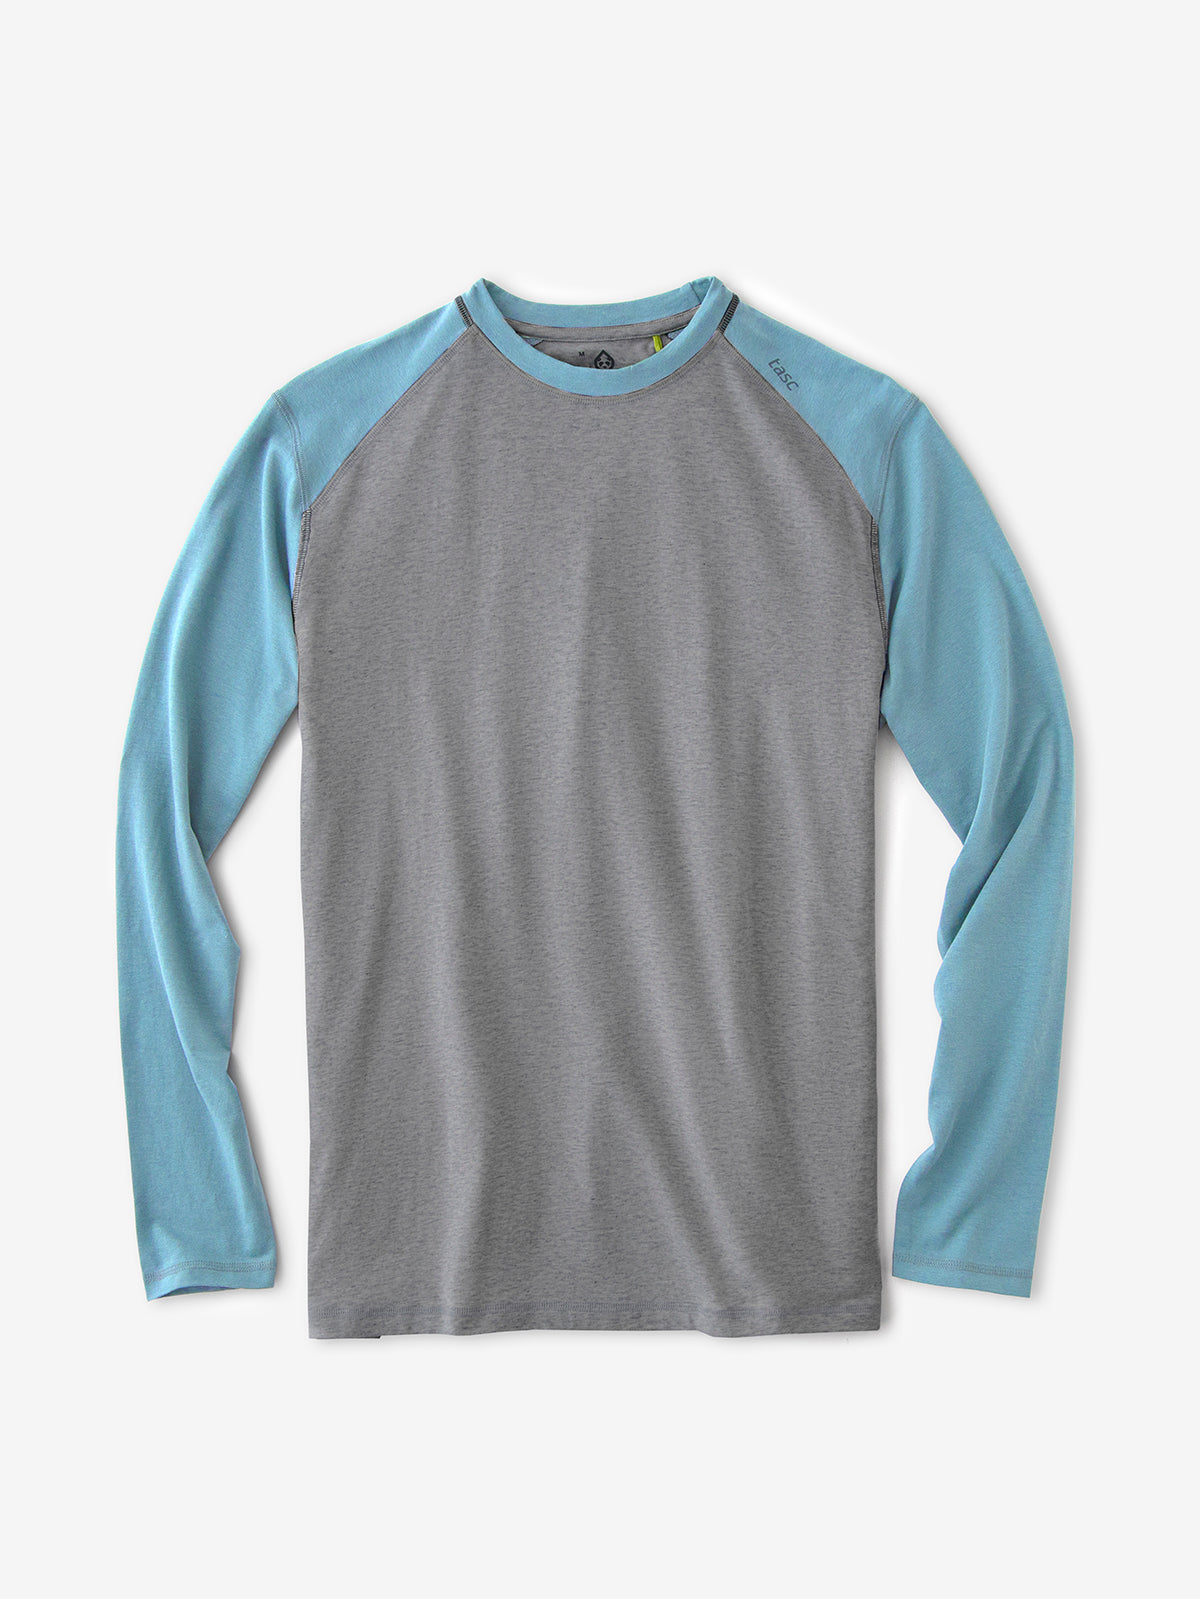 Carrollton Baseball Long Sleeve Fitness T-Shirt (HeatherGray/LakeBlue)